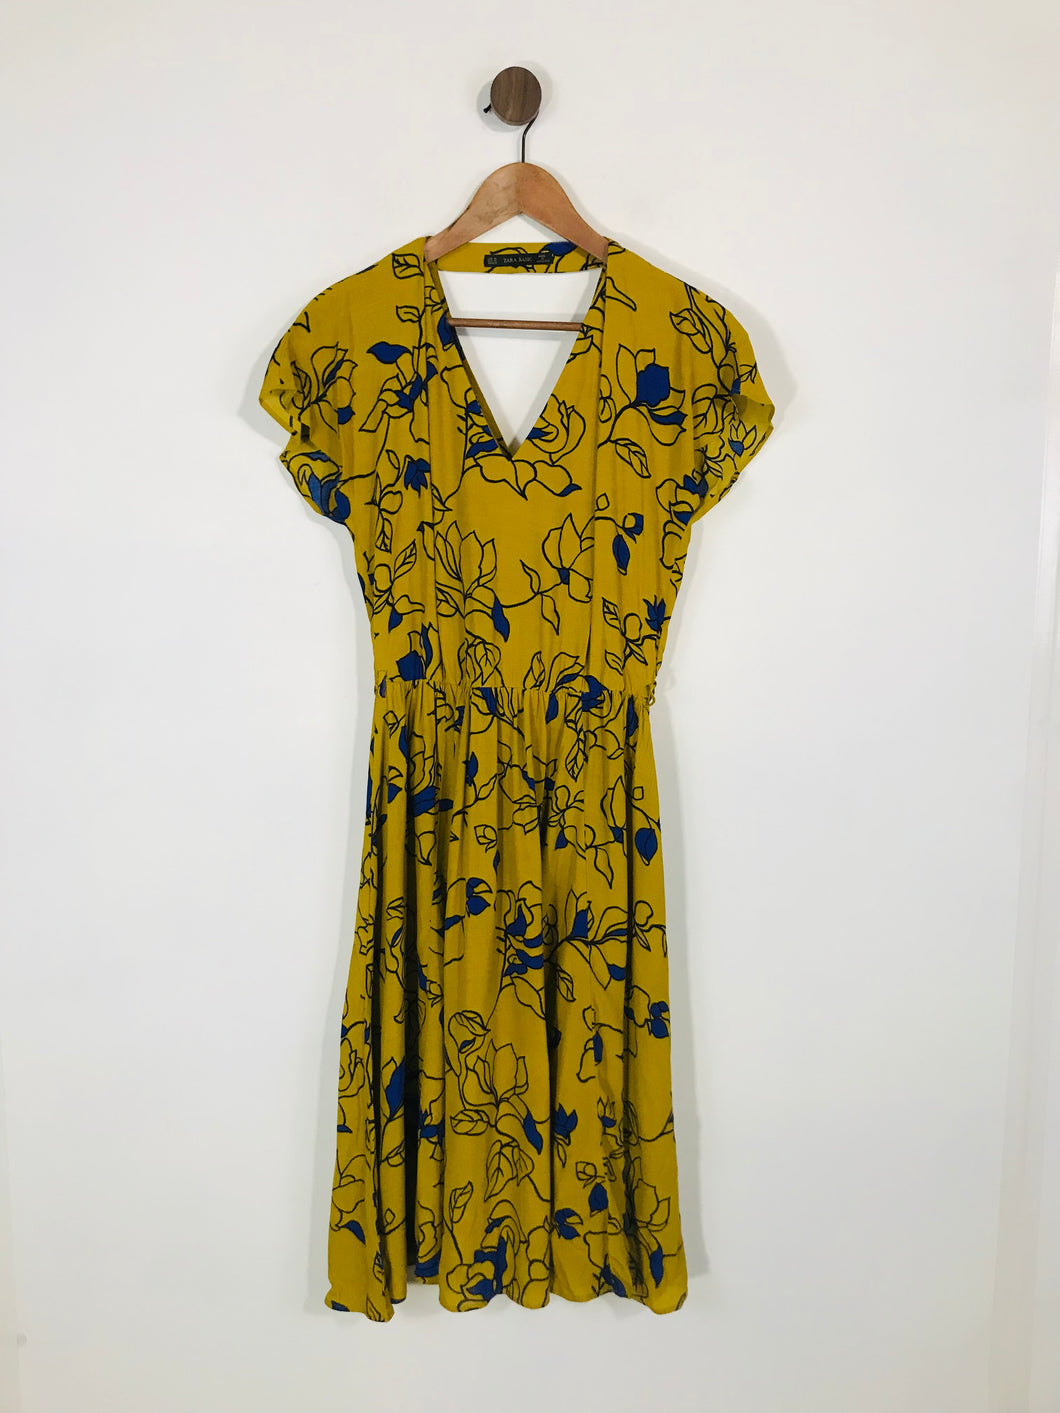 Zara Women's Floral Boho Sheath Dress | M UK10-12 | Yellow